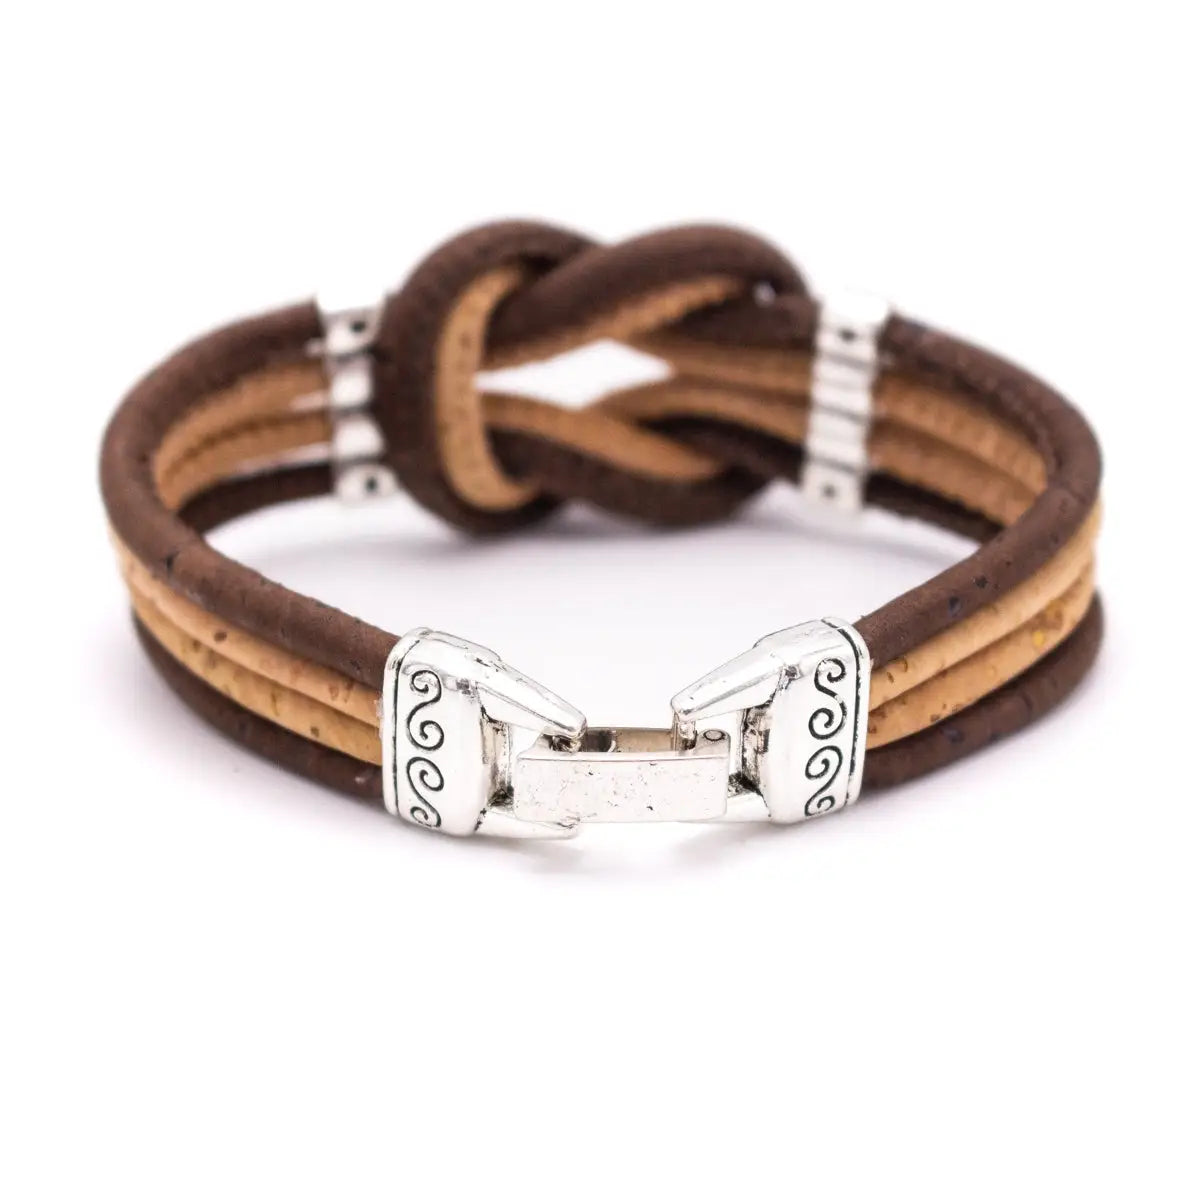 Angelco Accessories Cork 4 strand knot bracelet